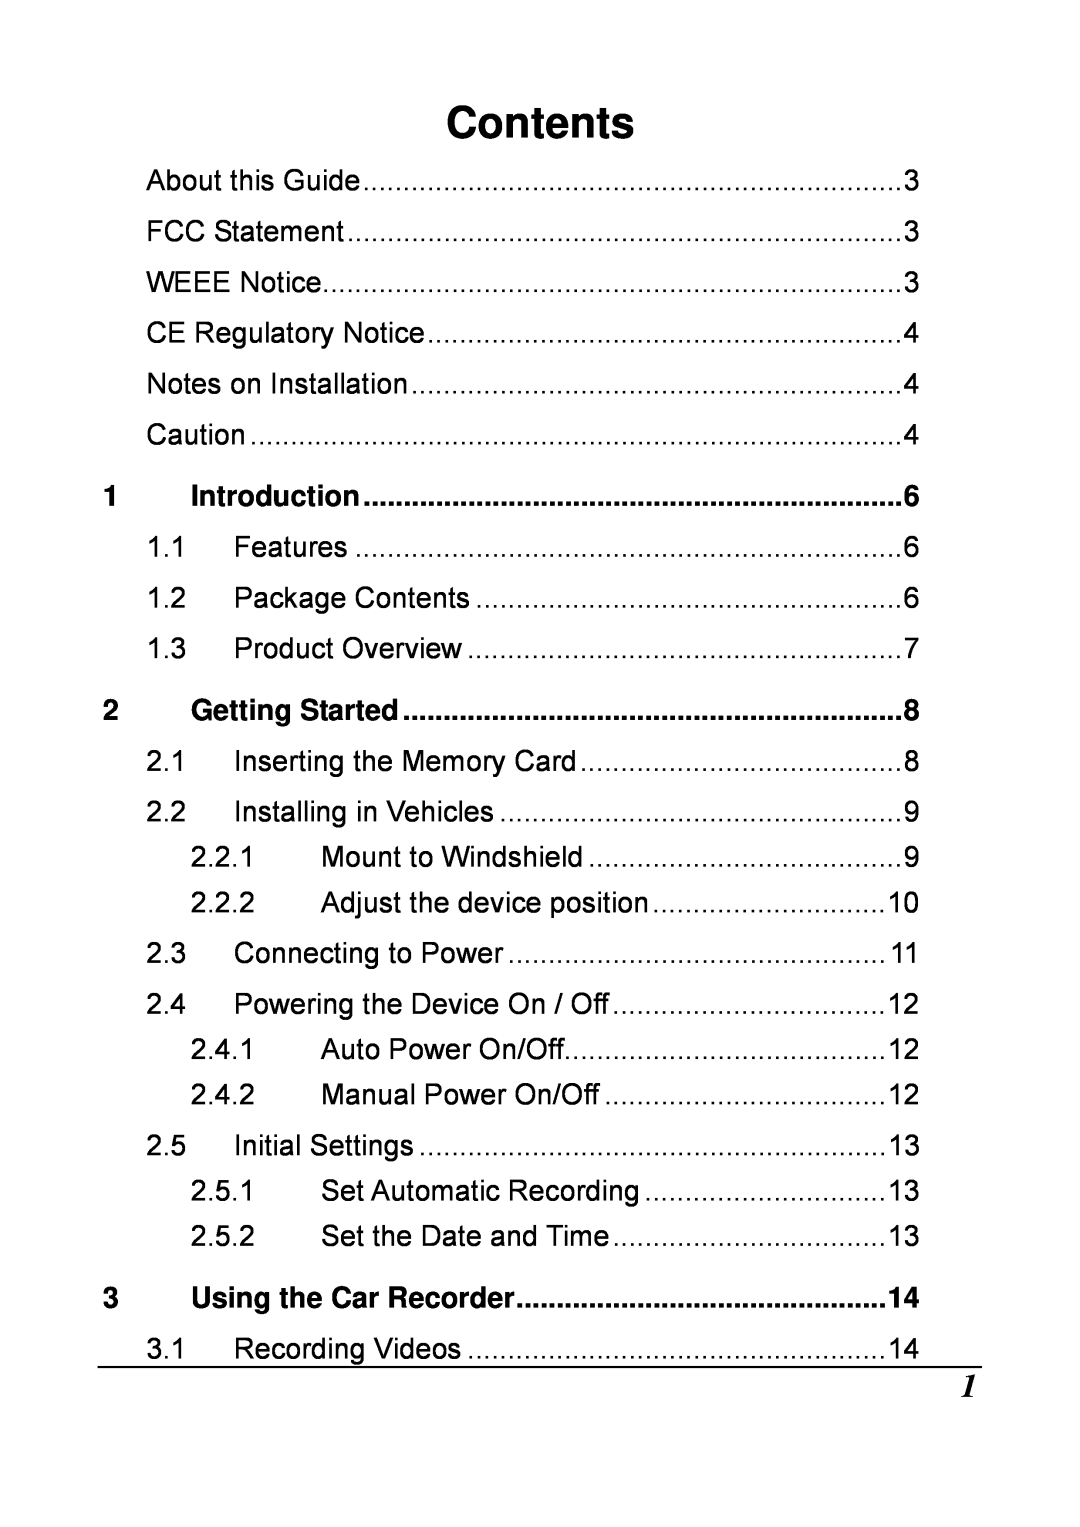 HP f210 Car manual Contents, Using the Car Recorder 